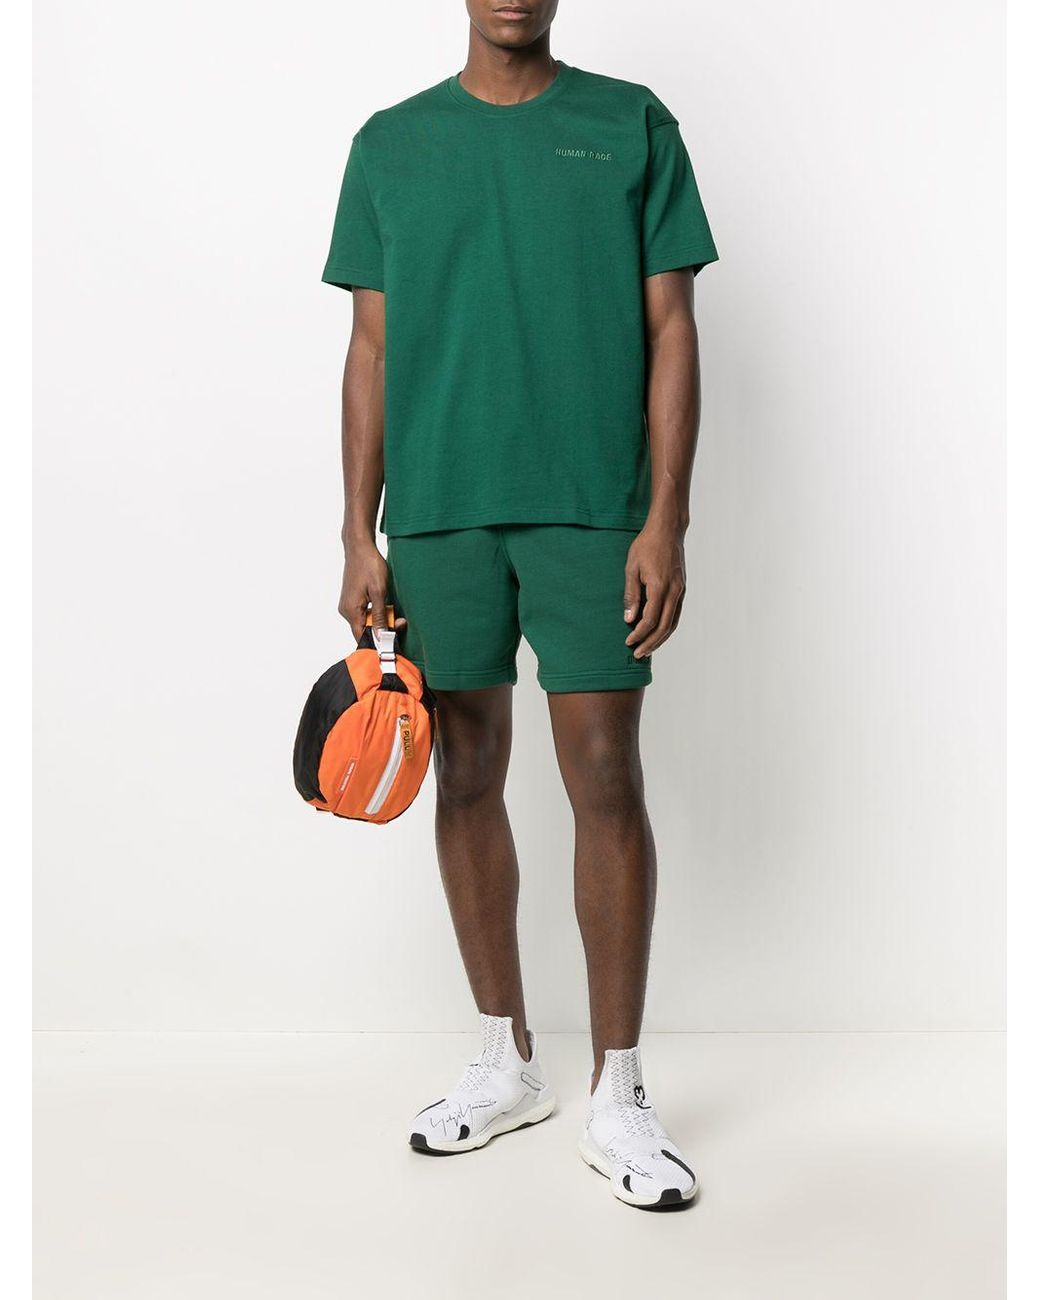 adidas X Pharrell Williams Human Race T-shirt in Green for Men | Lyst Canada